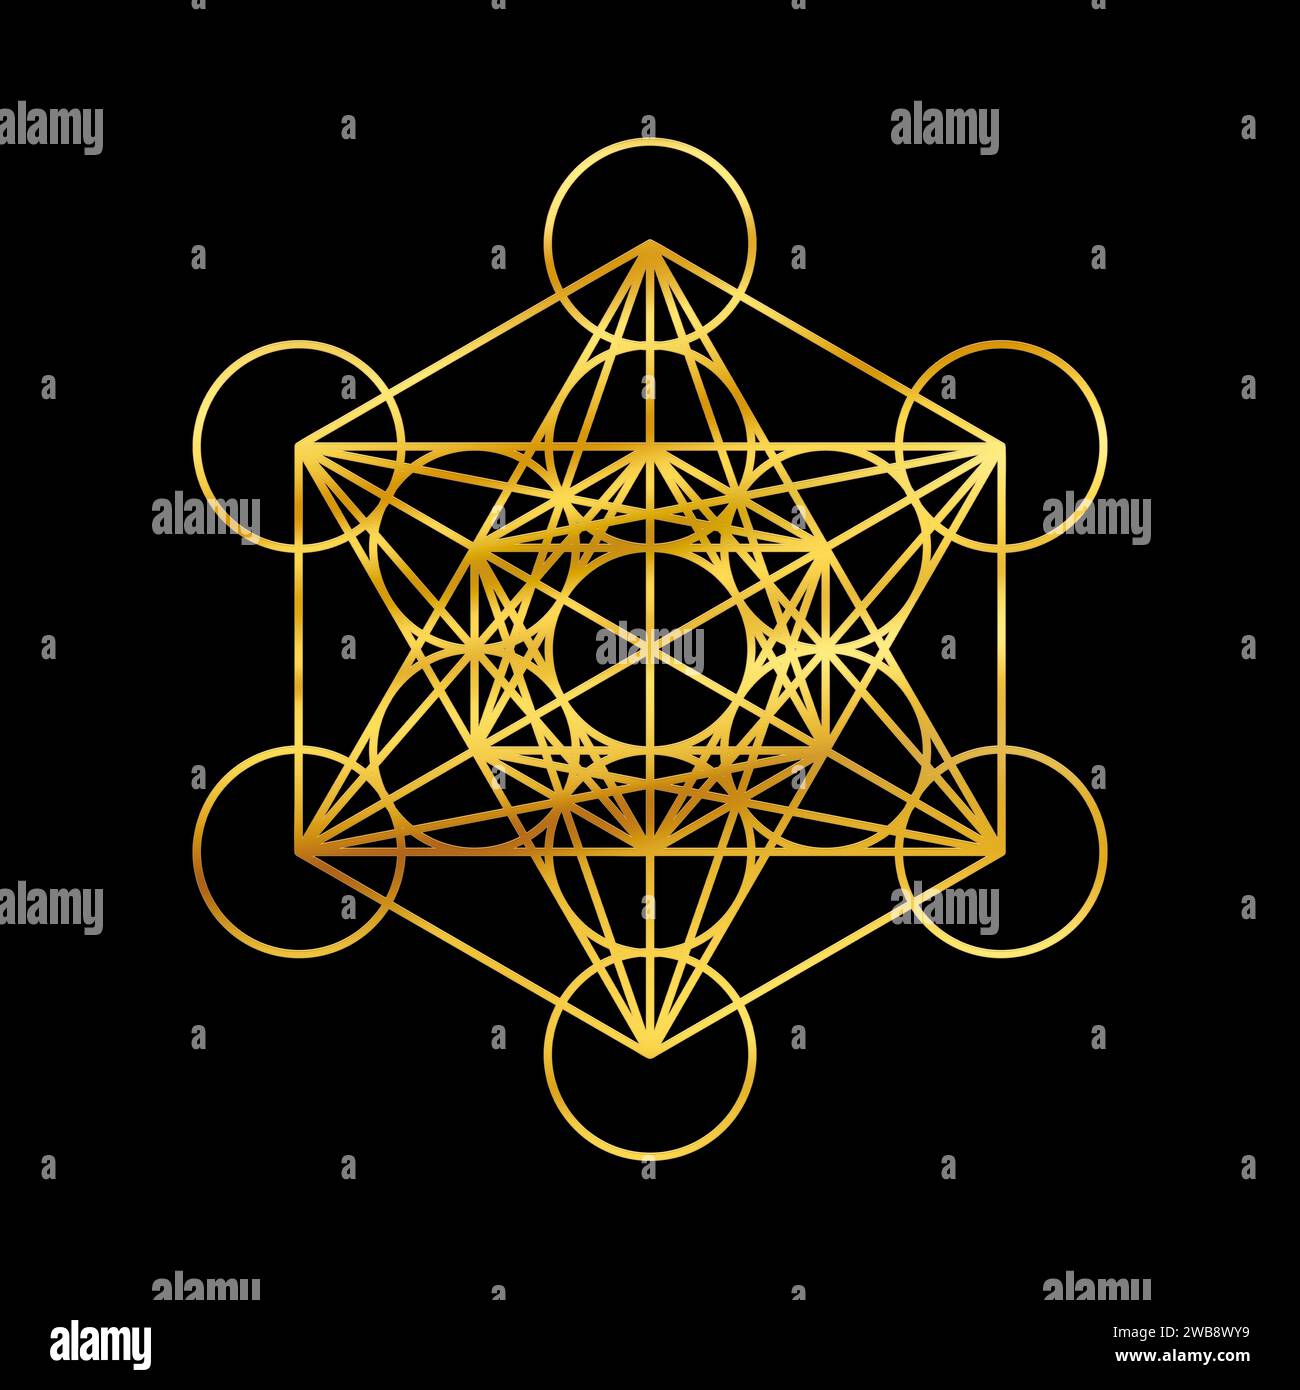 Metatron cube gold symbol isolated on black background. Sacred geometry golden symbol. Stock Photo